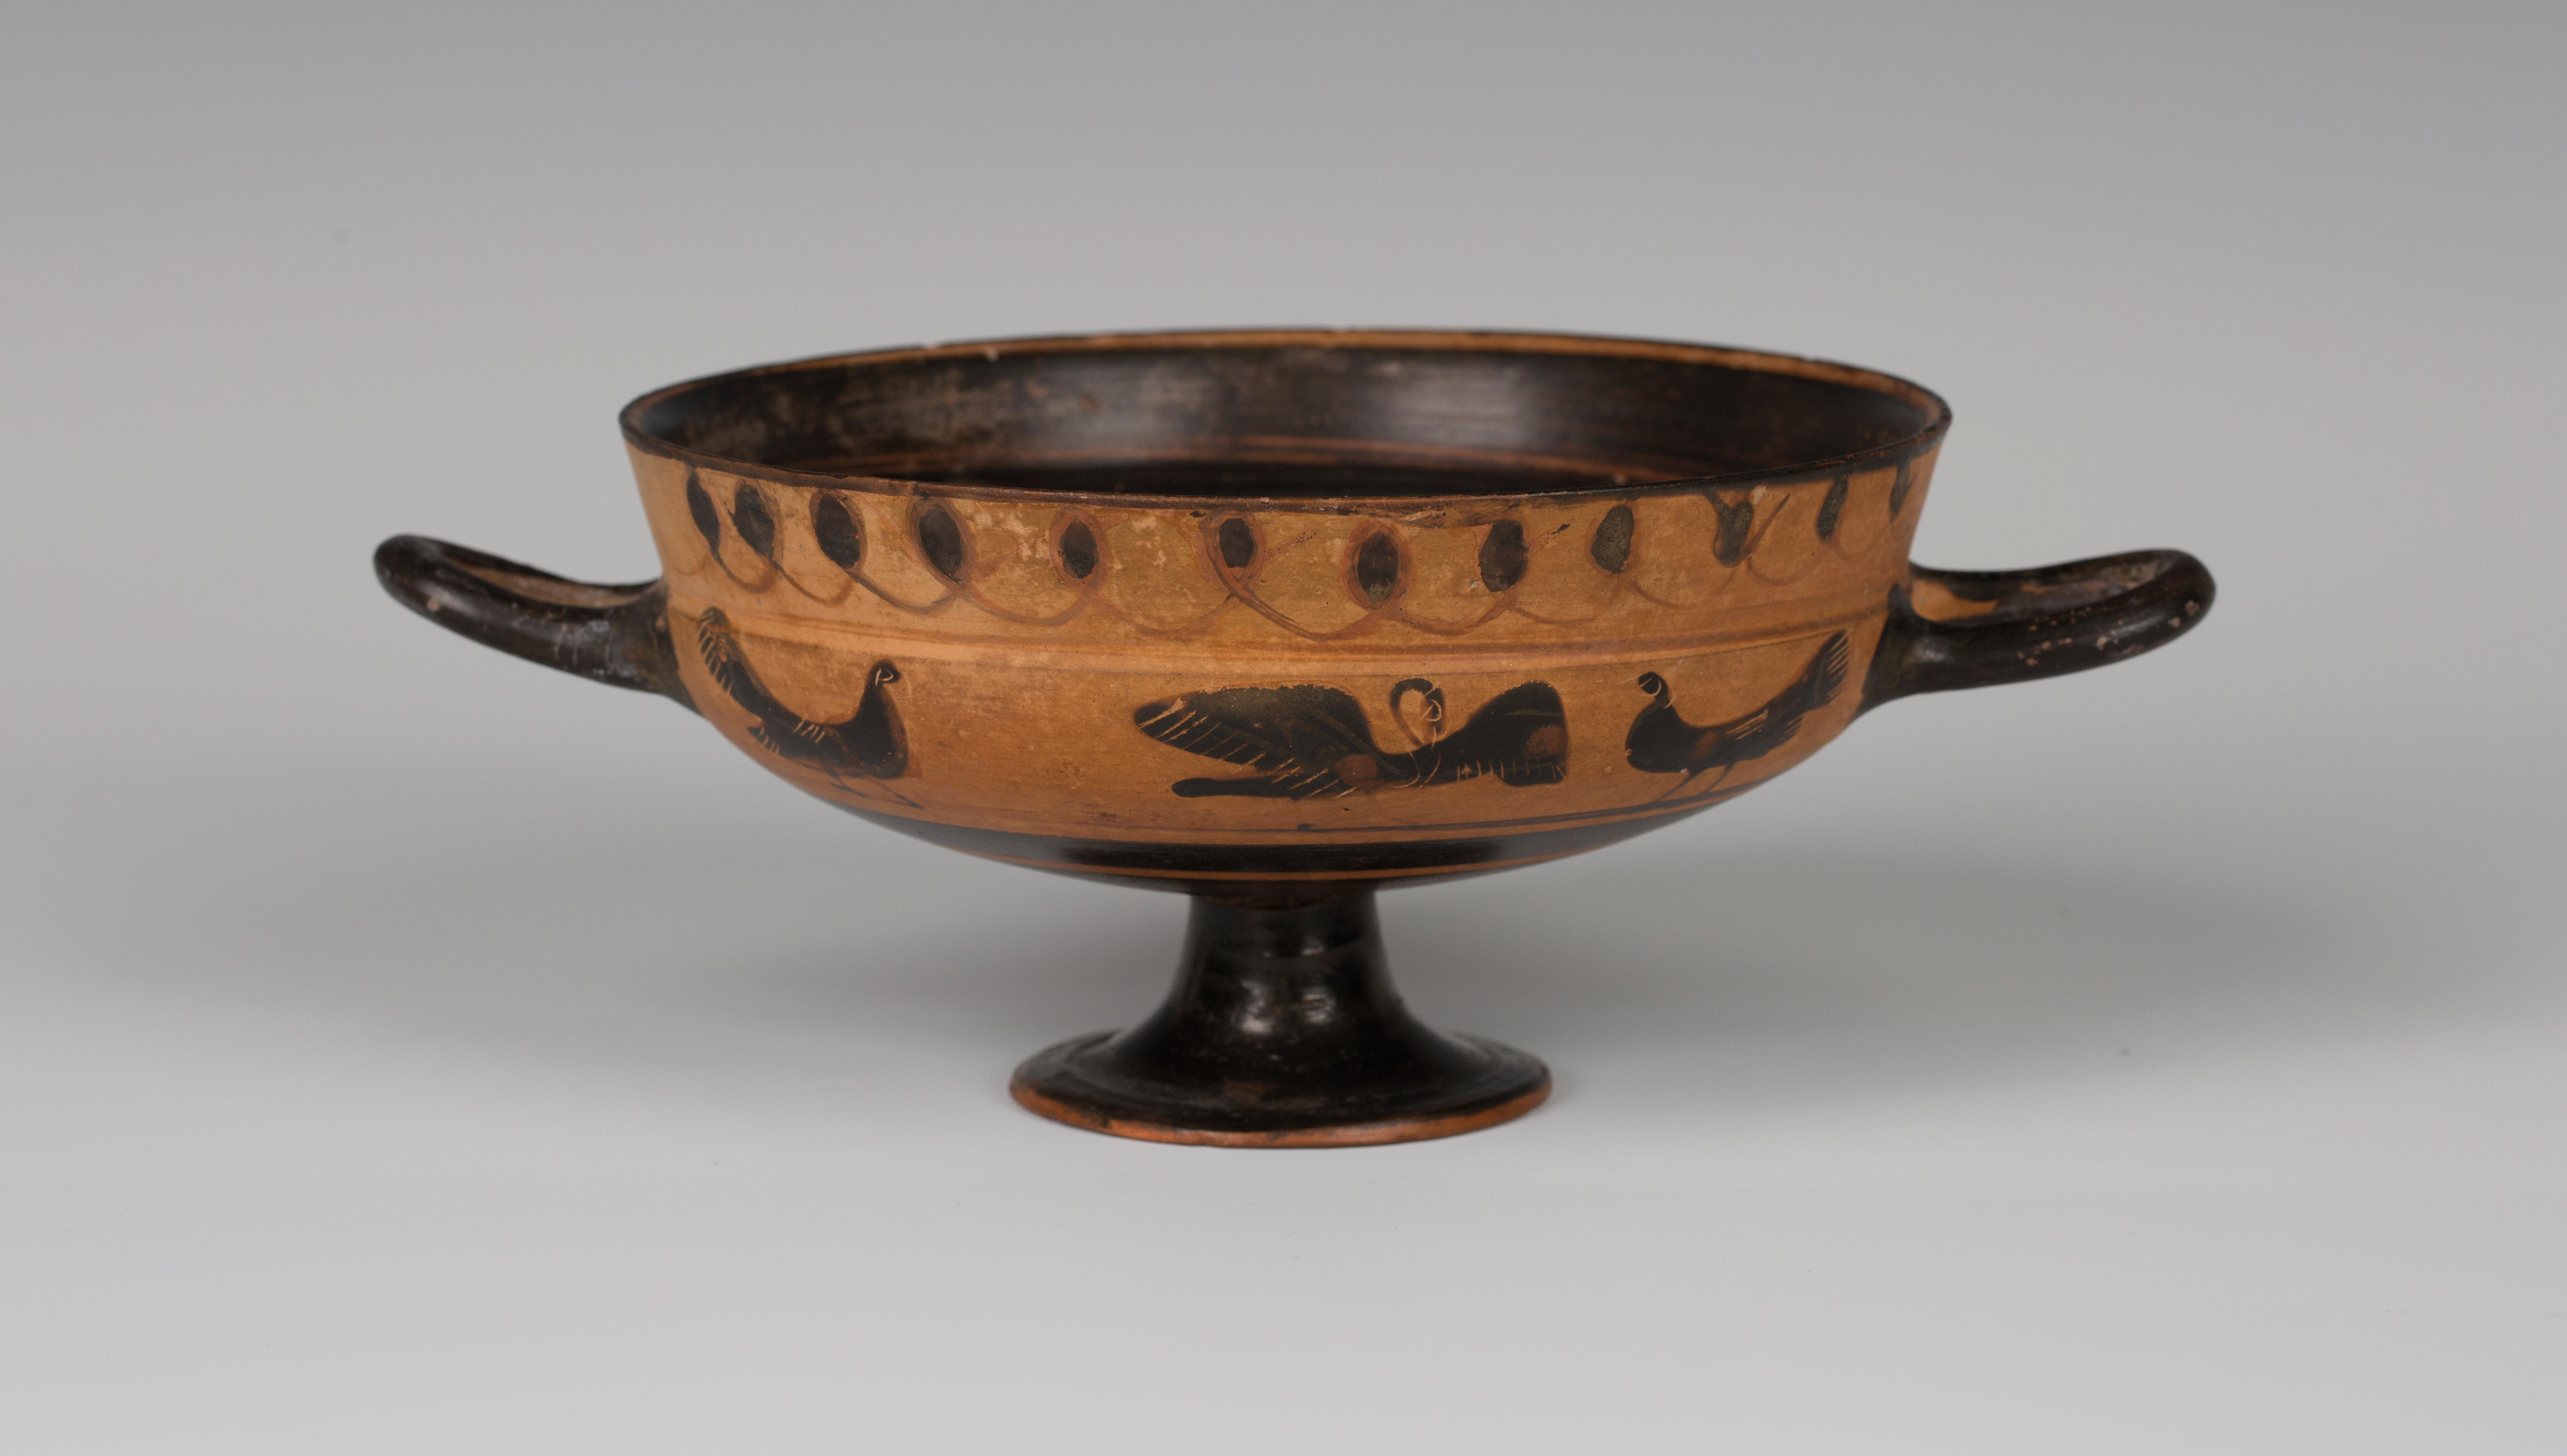 A 6th century BC, Ancient Greek Siana black figure kylix (wine cup)